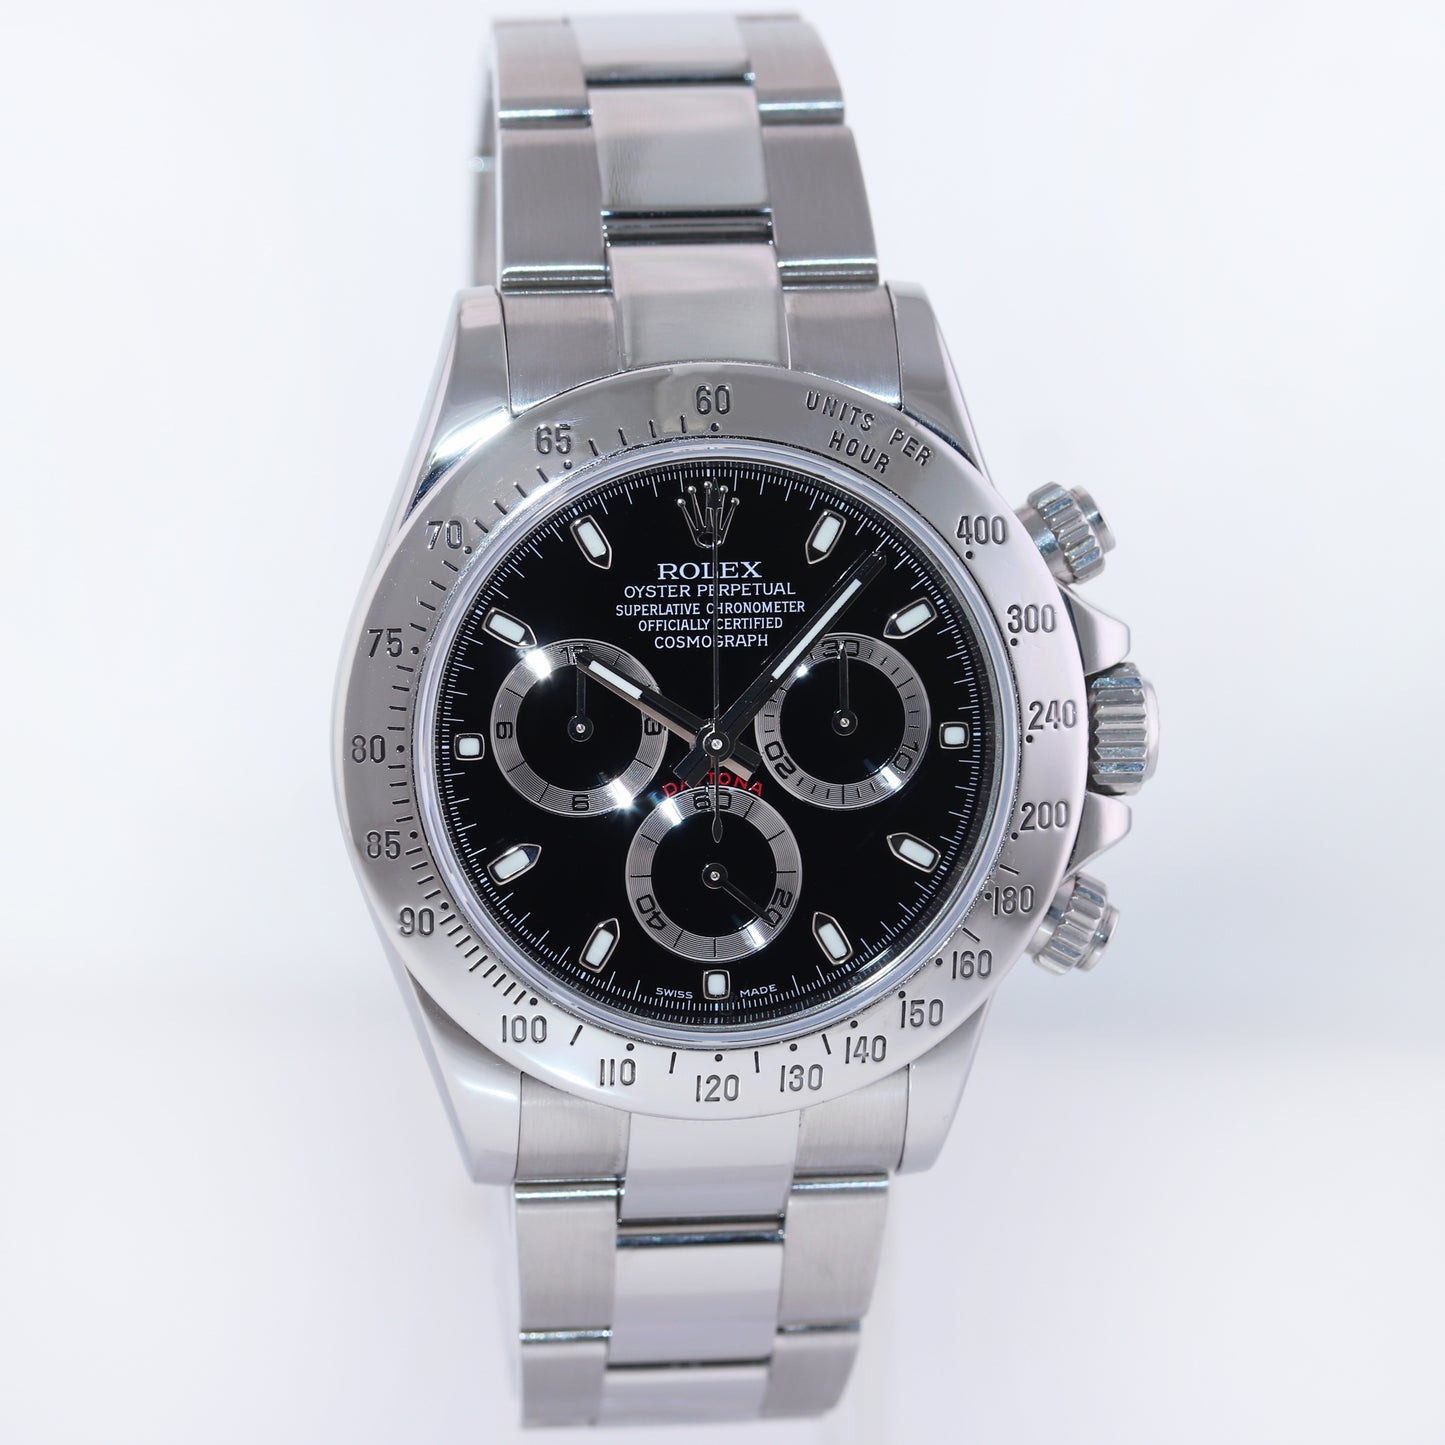 MINT 2013 PAPERS Rolex Daytona 116520 Black Steel Cosmograph Watch Box